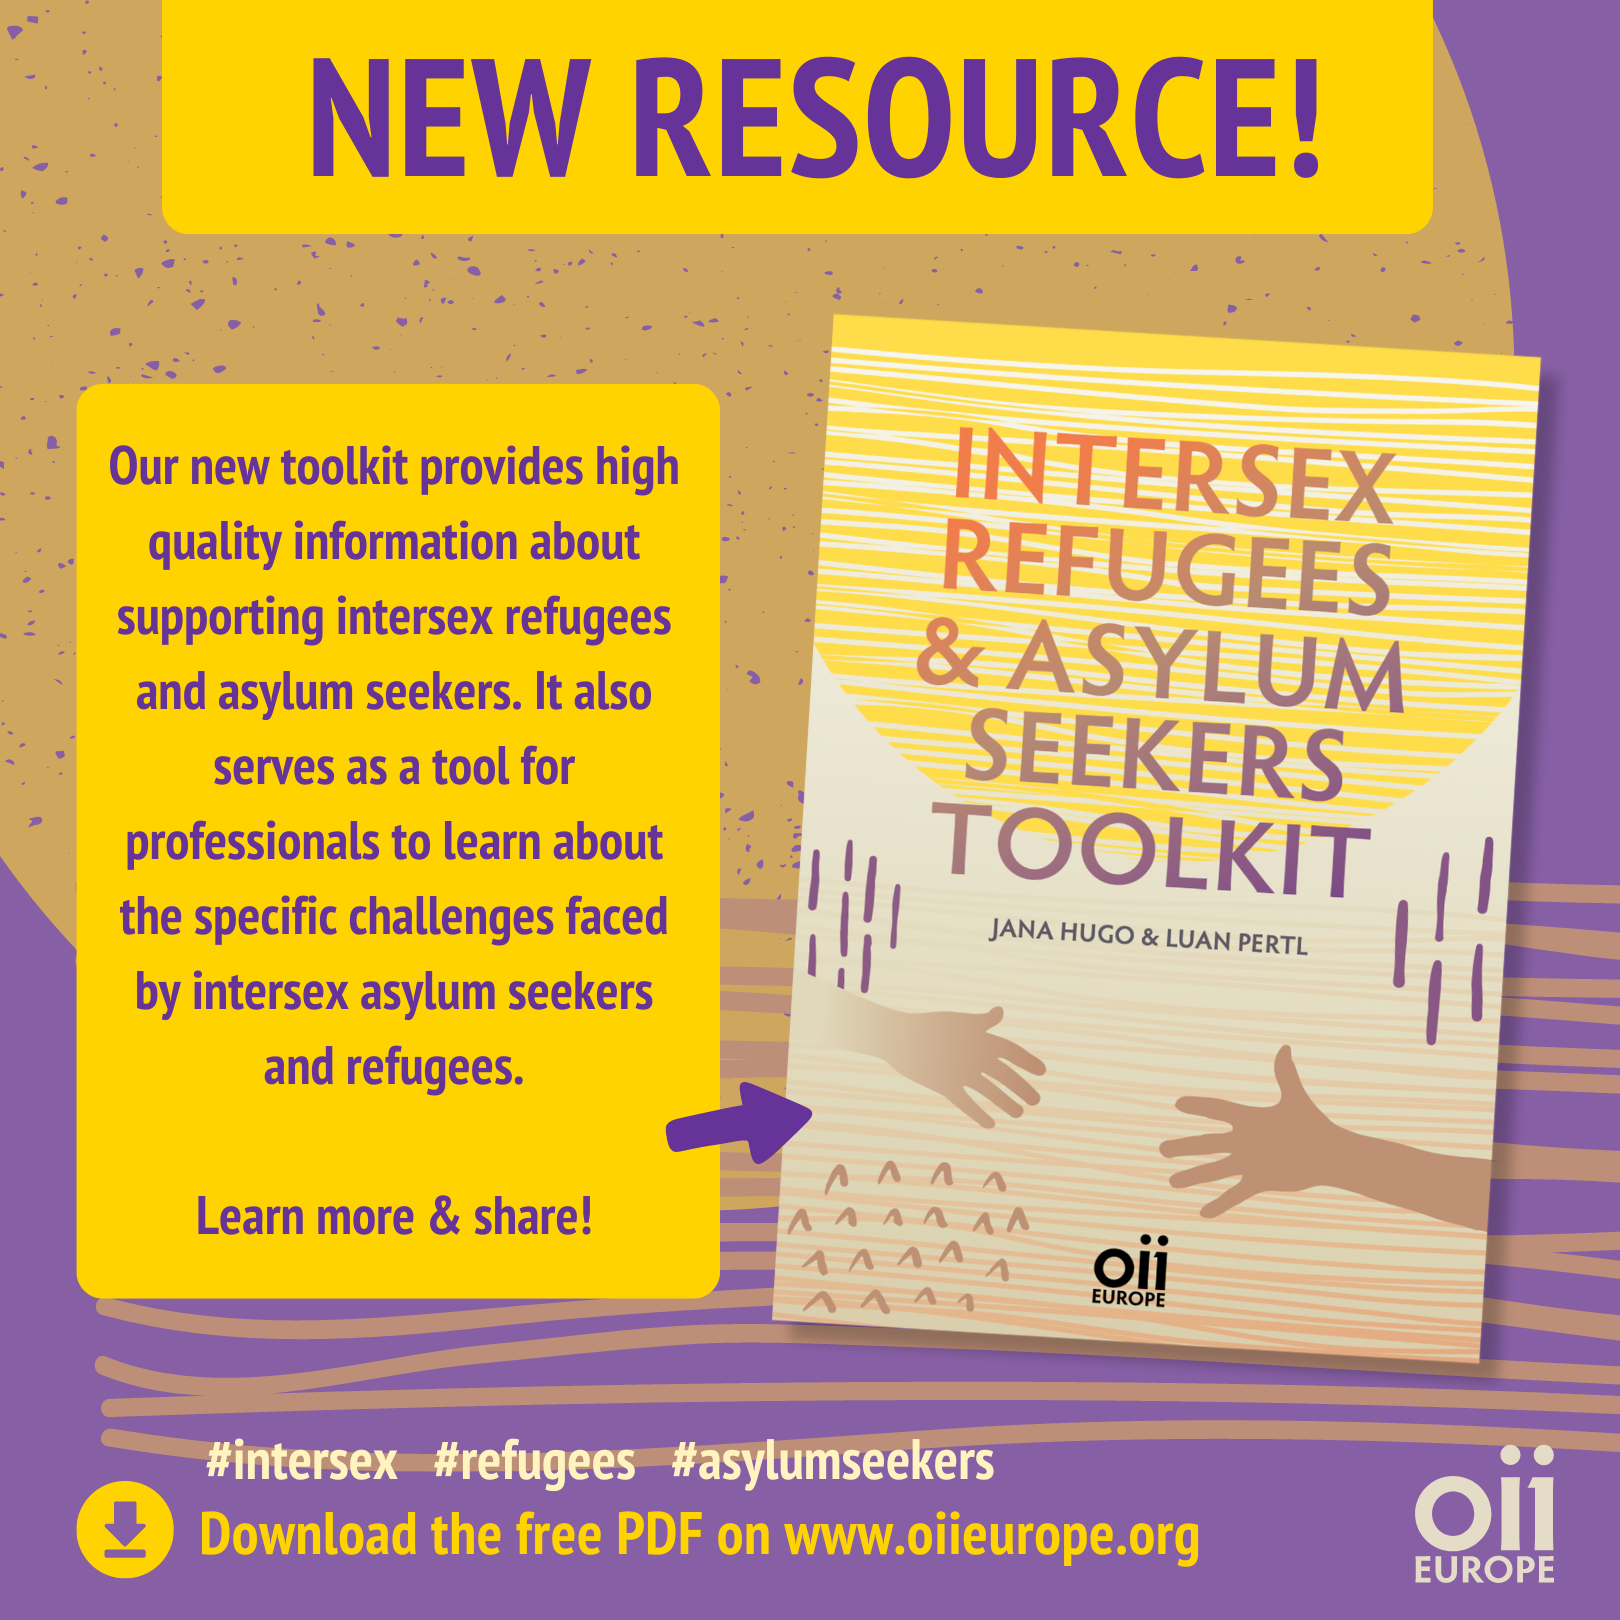 New resource: OII Europe Refugees & Asylum Seekers toolkit